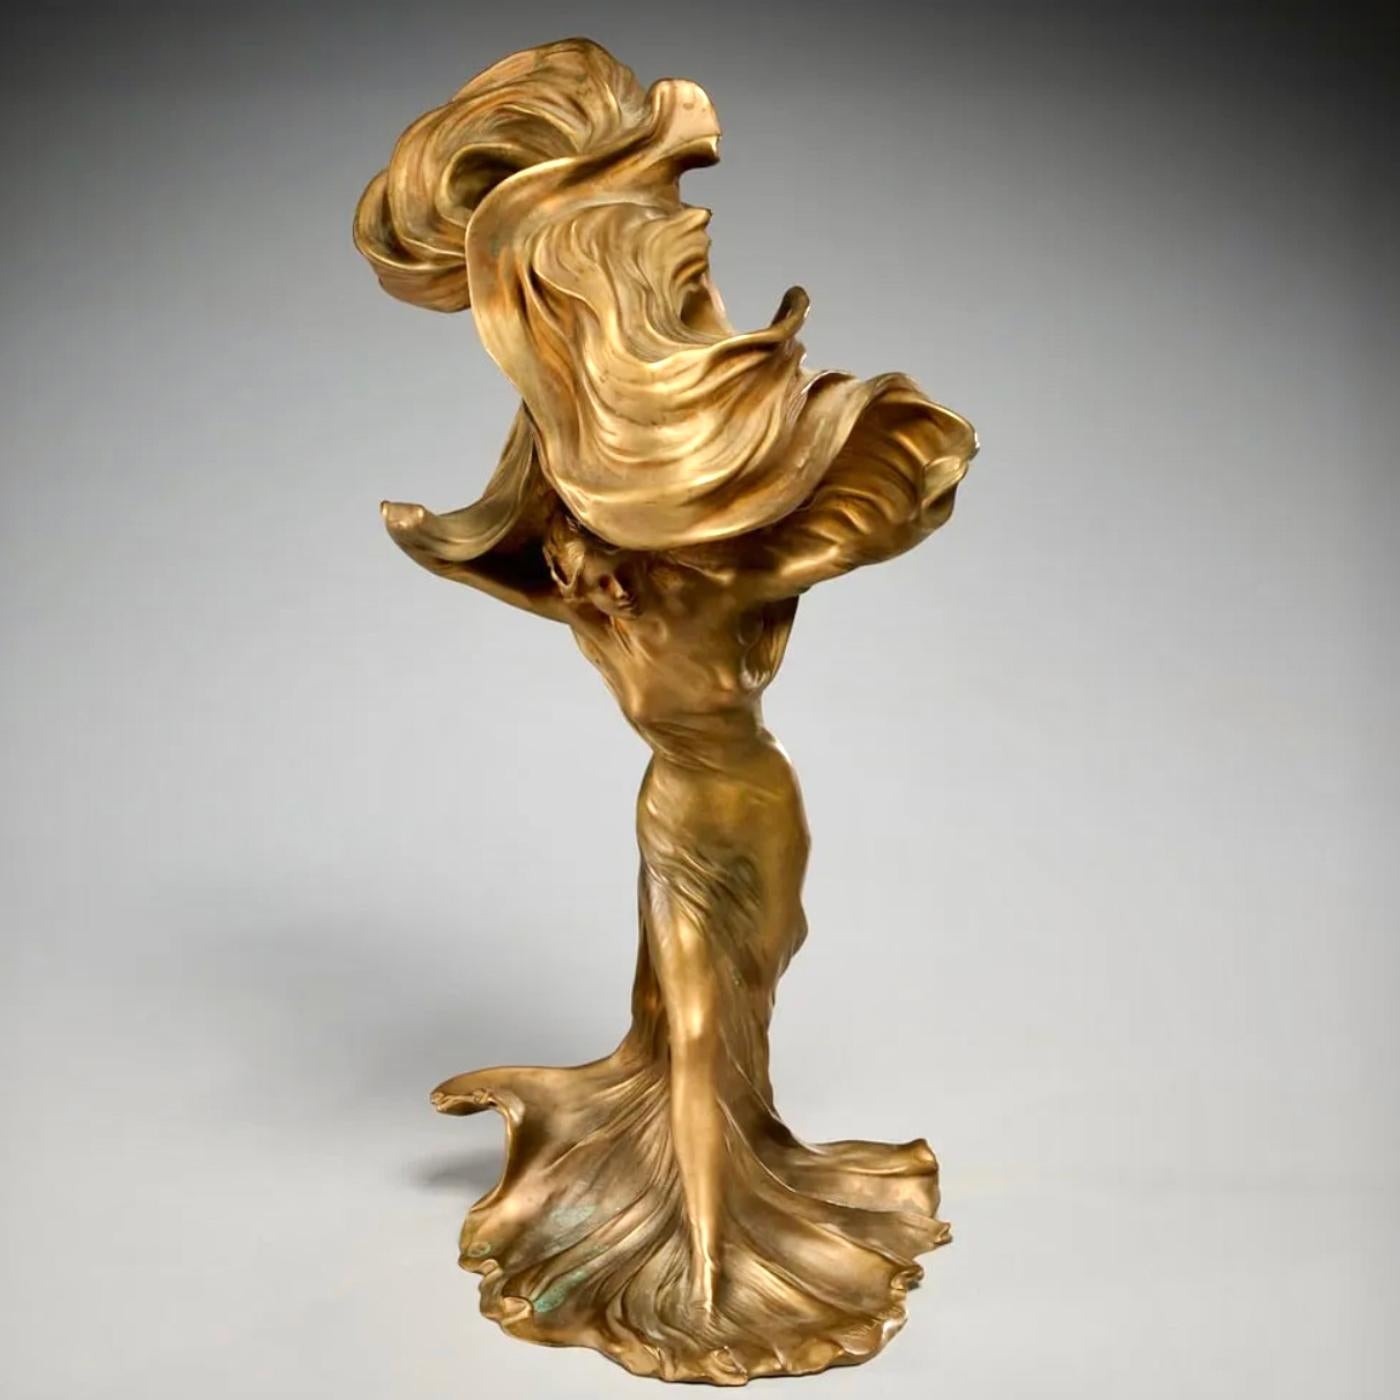 Tischlampe „Loie Fuller“ von Francois-Raoul Larche  (Art nouveau) im Angebot